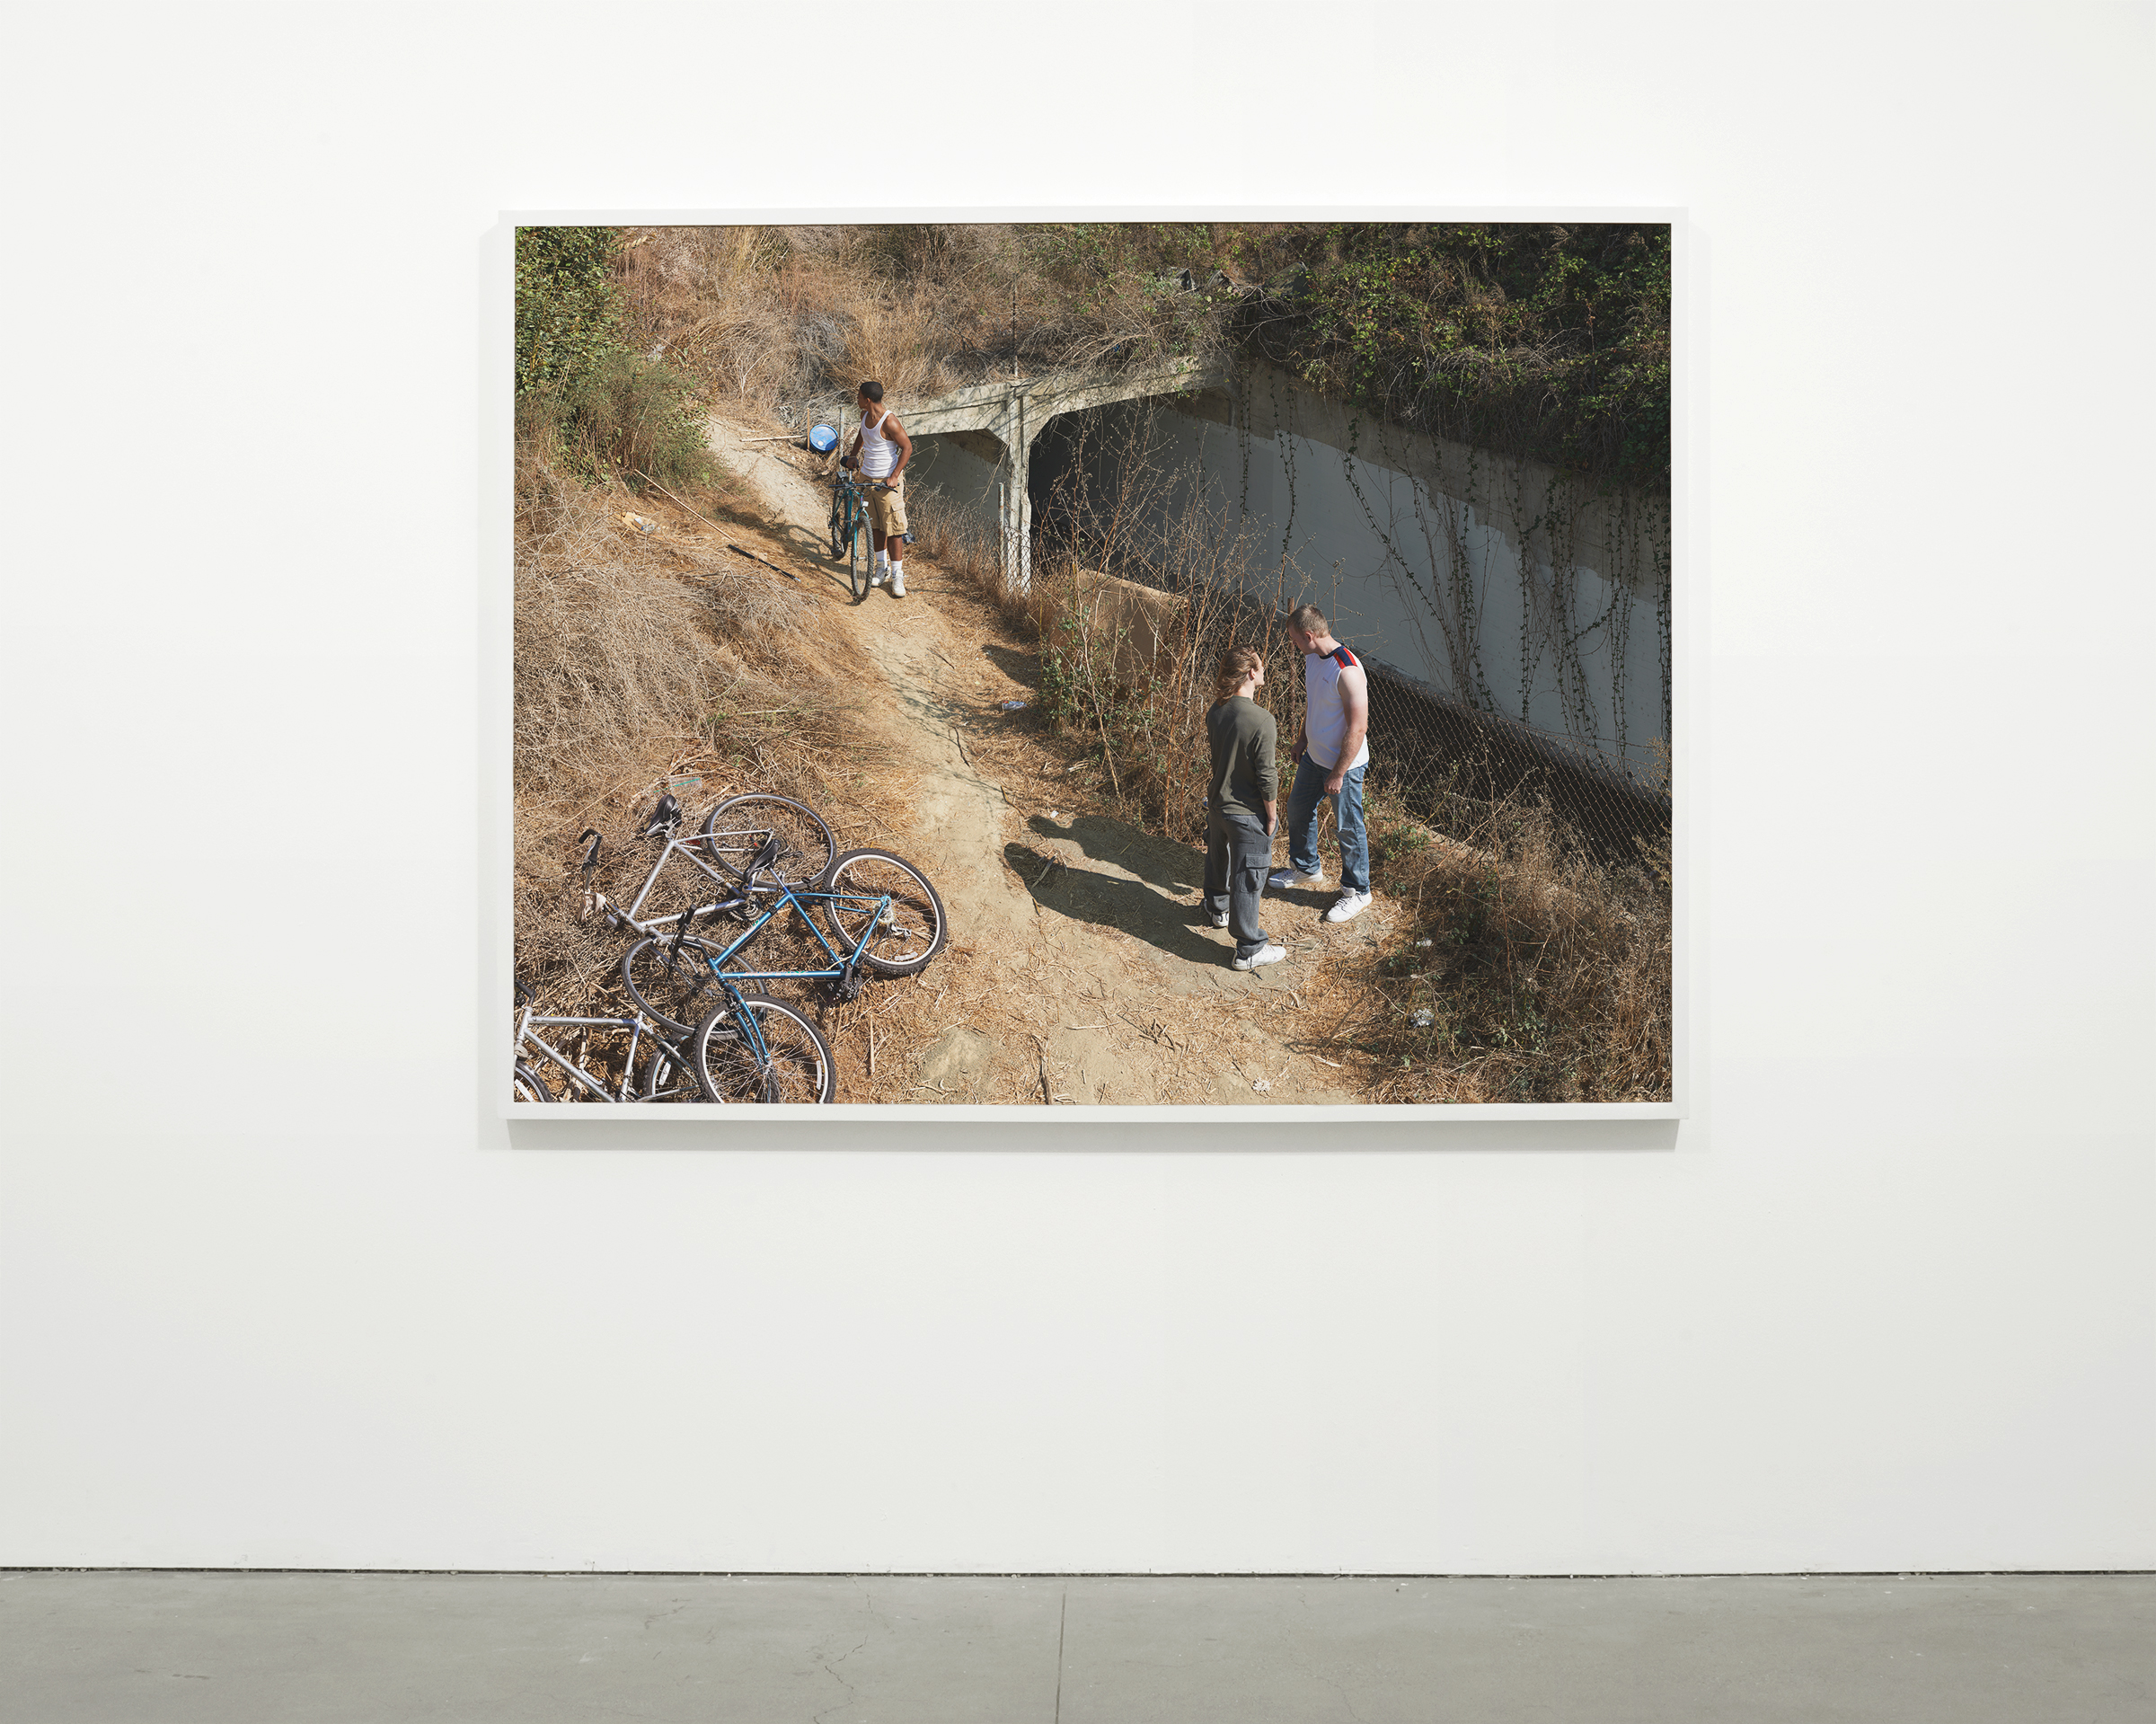  “Embankment (Ad Infinitum)”, 2017 - 2018  54 x 71 in. (137.15 x 180.35 cm) 